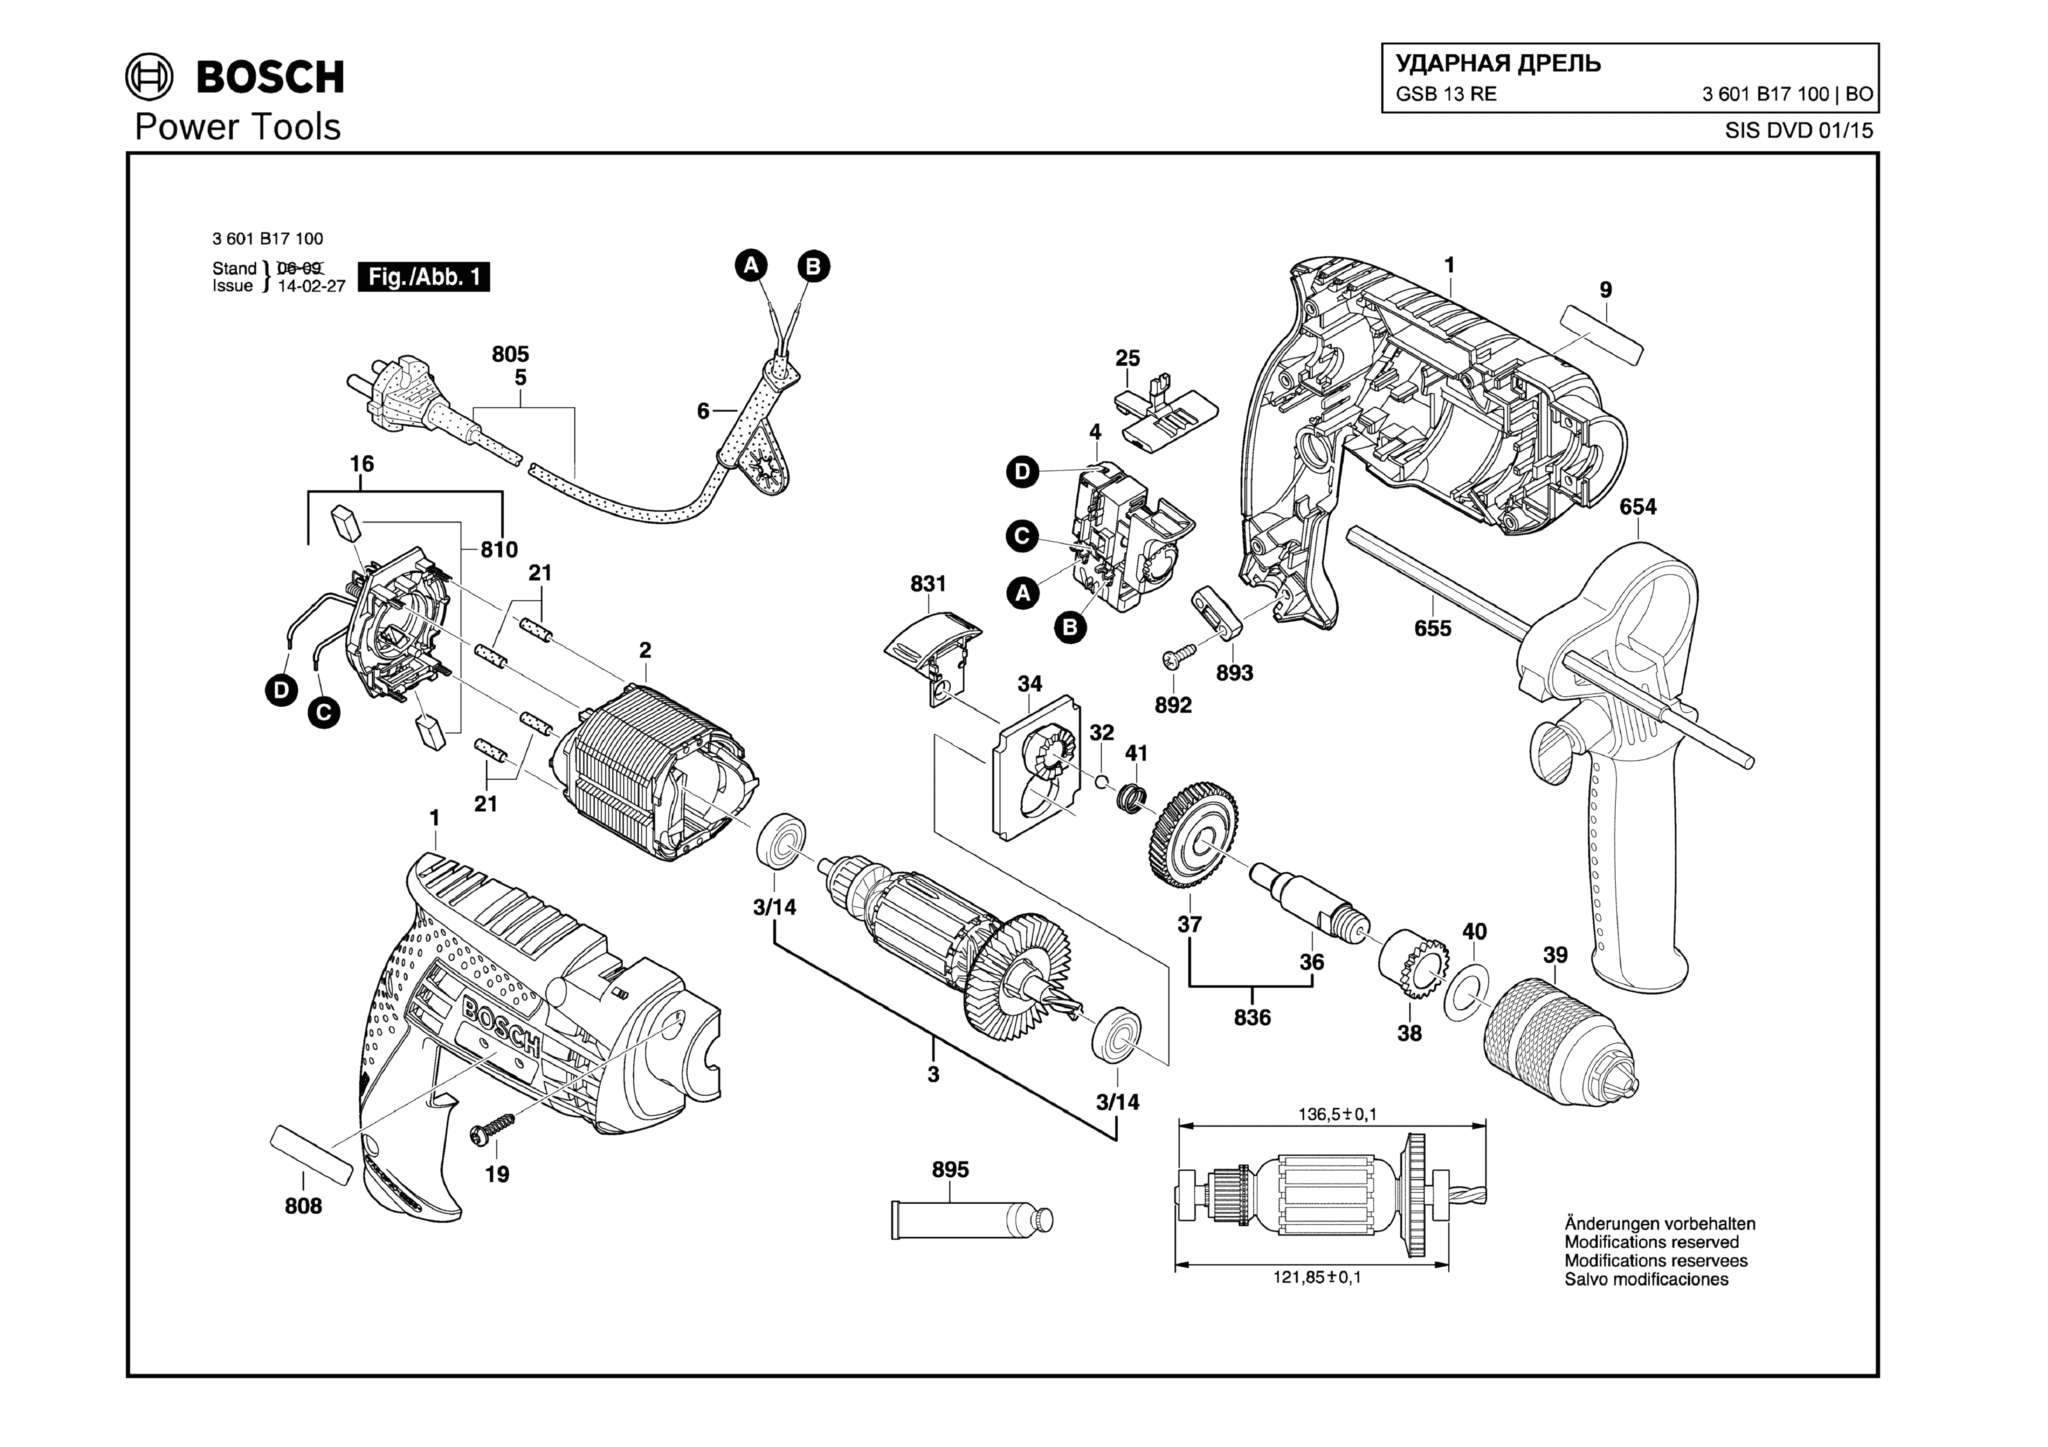 Запчасти, схема и деталировка Bosch GSB 13 RE (ТИП 3601B17100)